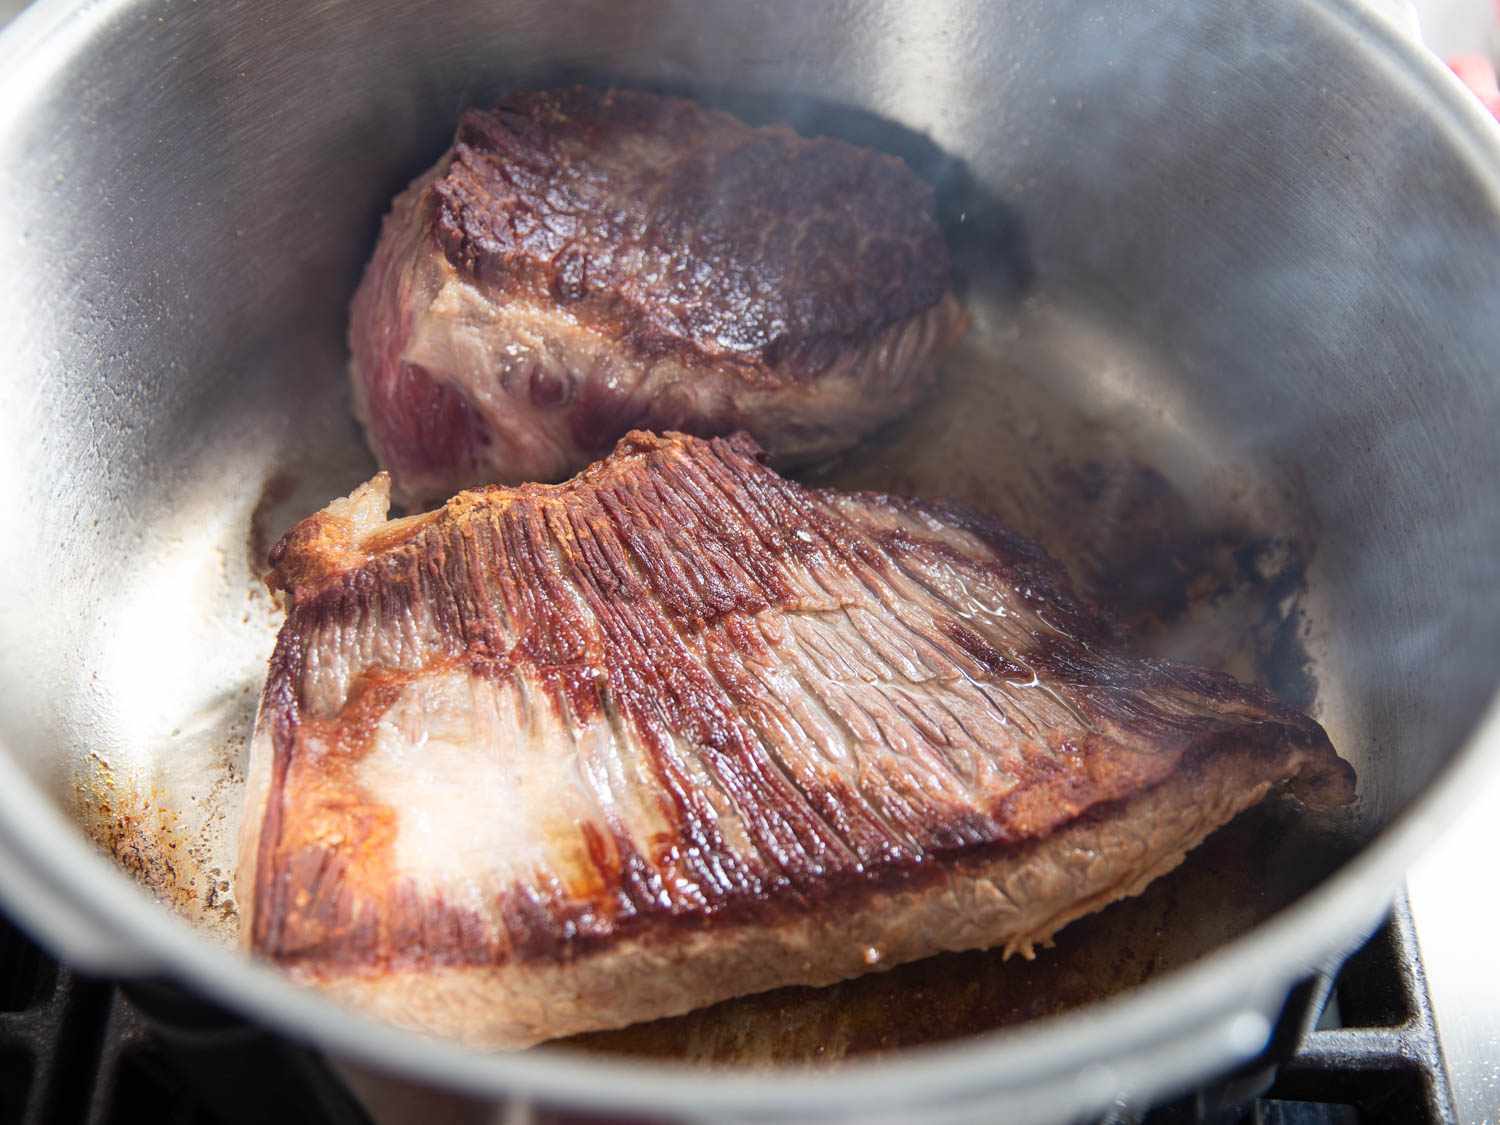 A halved brisket roast is browned in a stovetop pressure cooker.